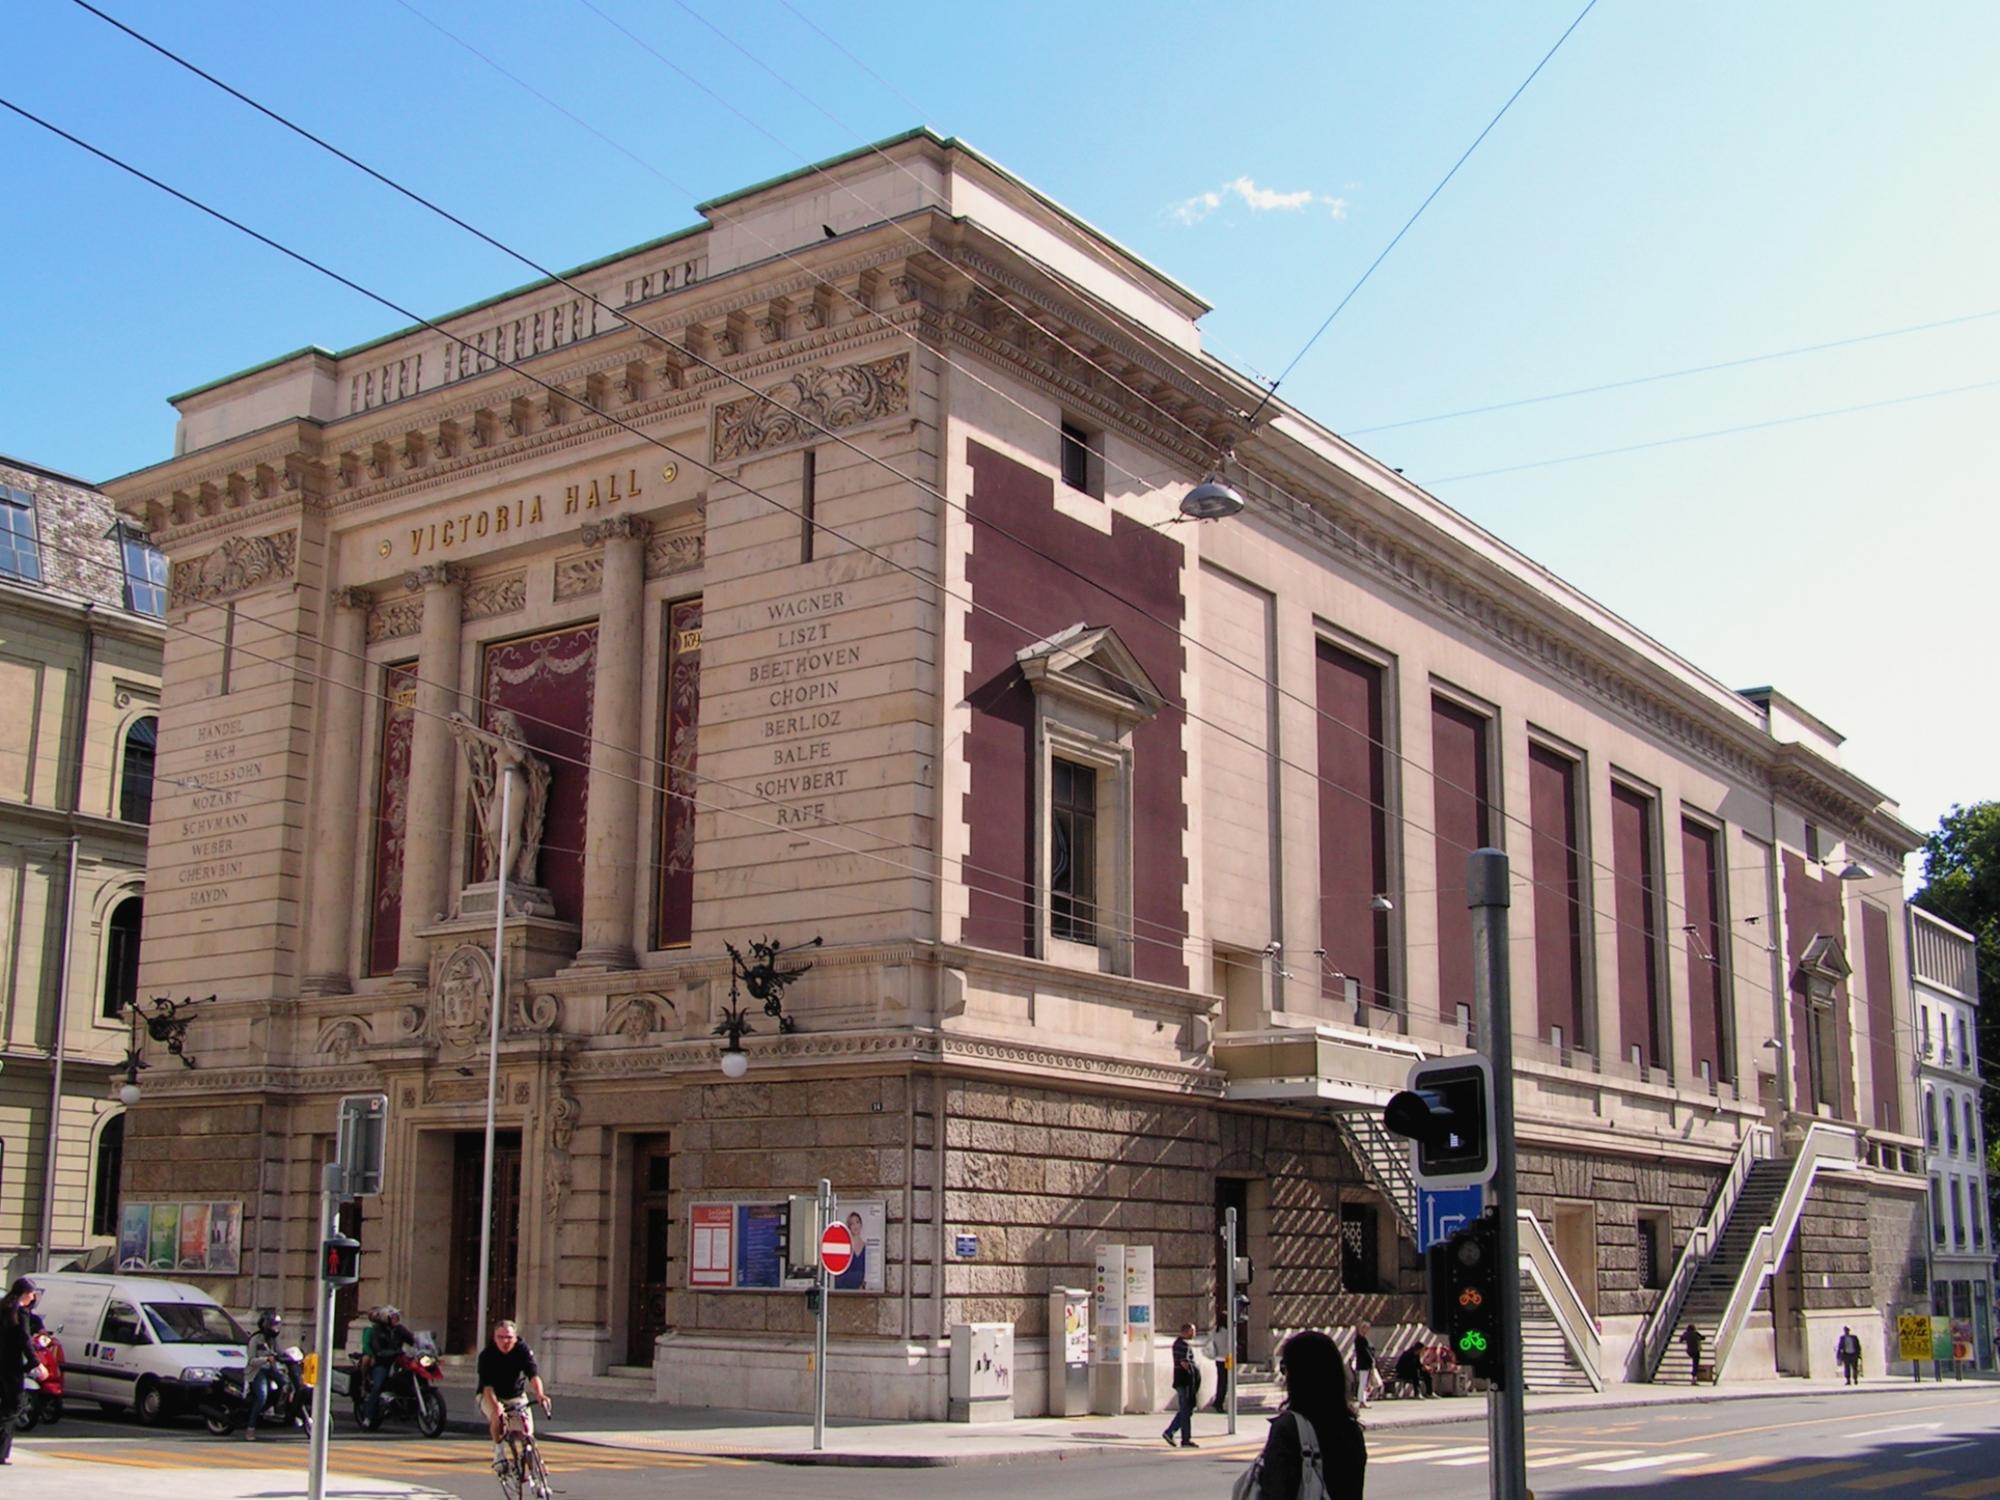 Le Victoria Hall de Genève. [CC-BY-SA - Romano1246]